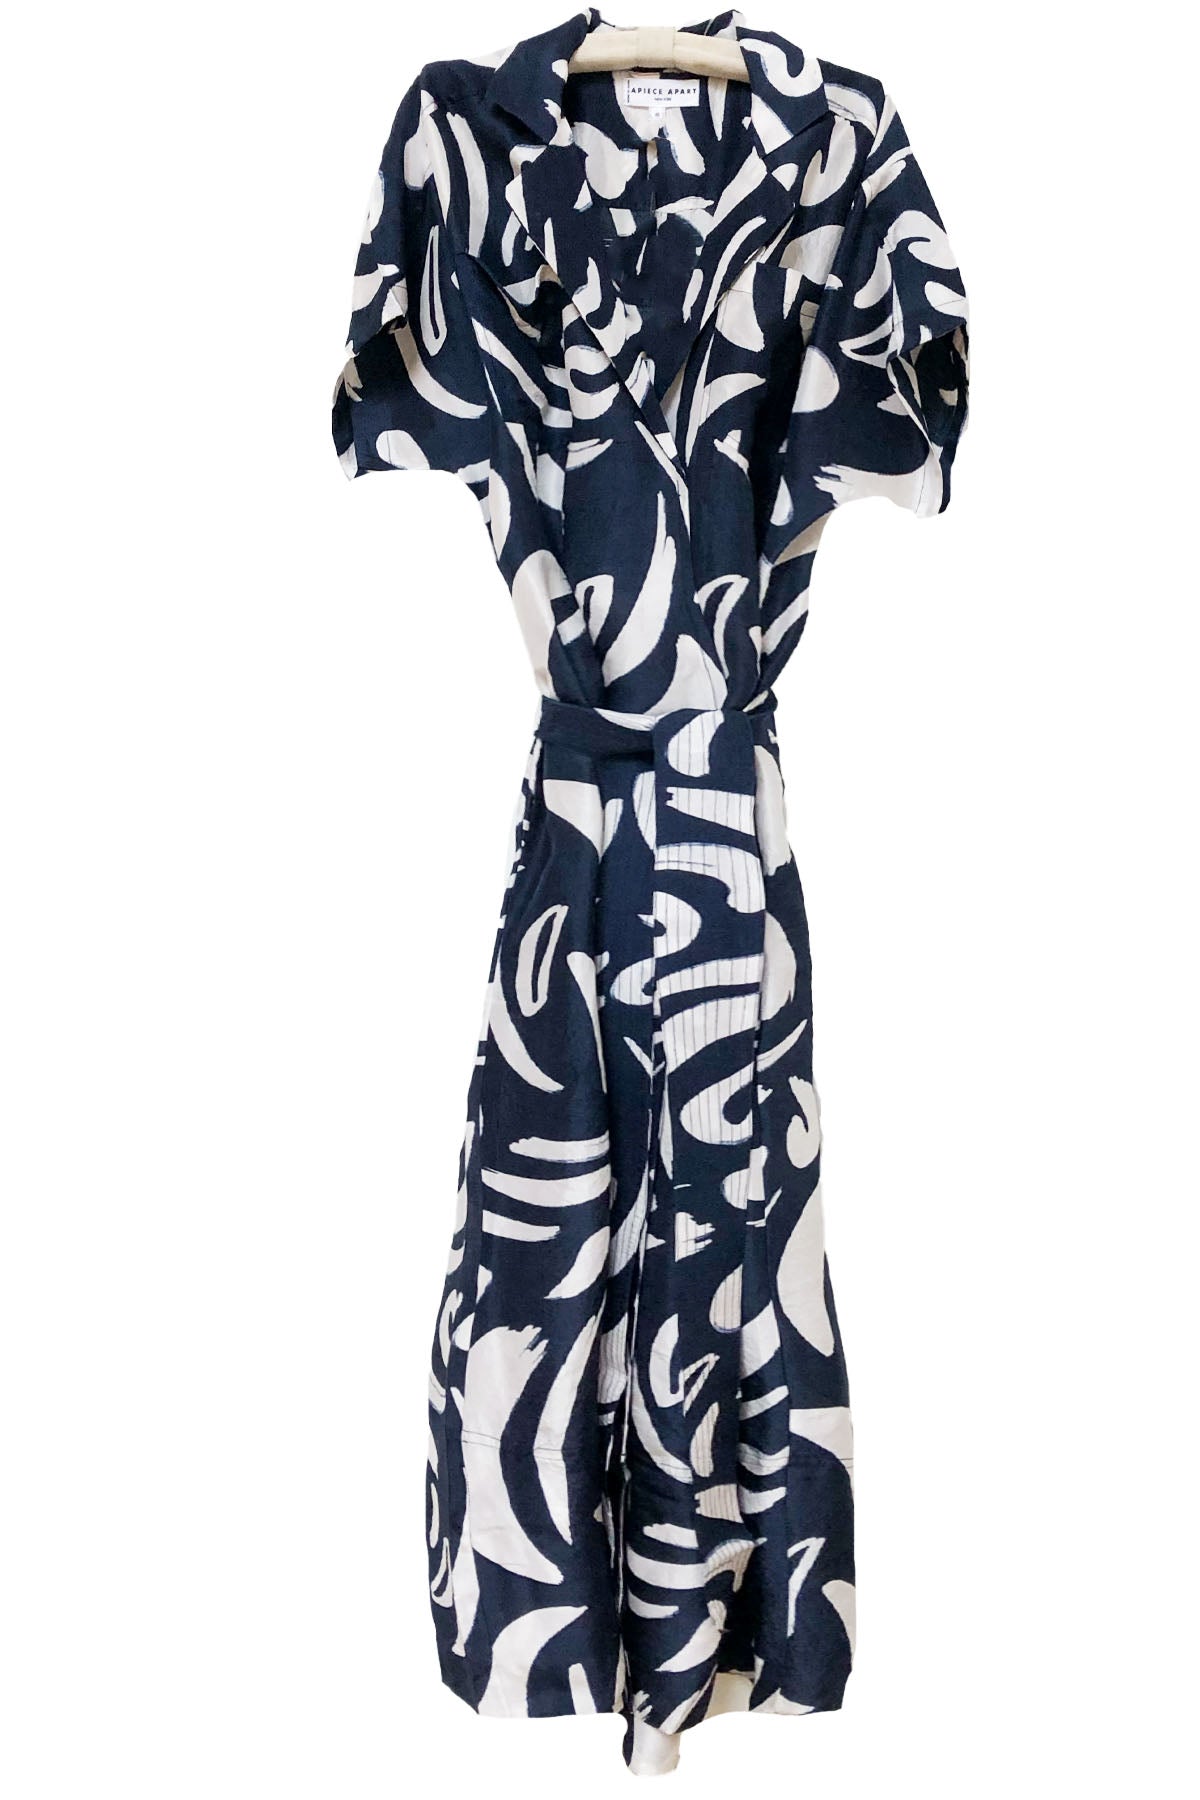 vincenza wrap dress - navy abstract